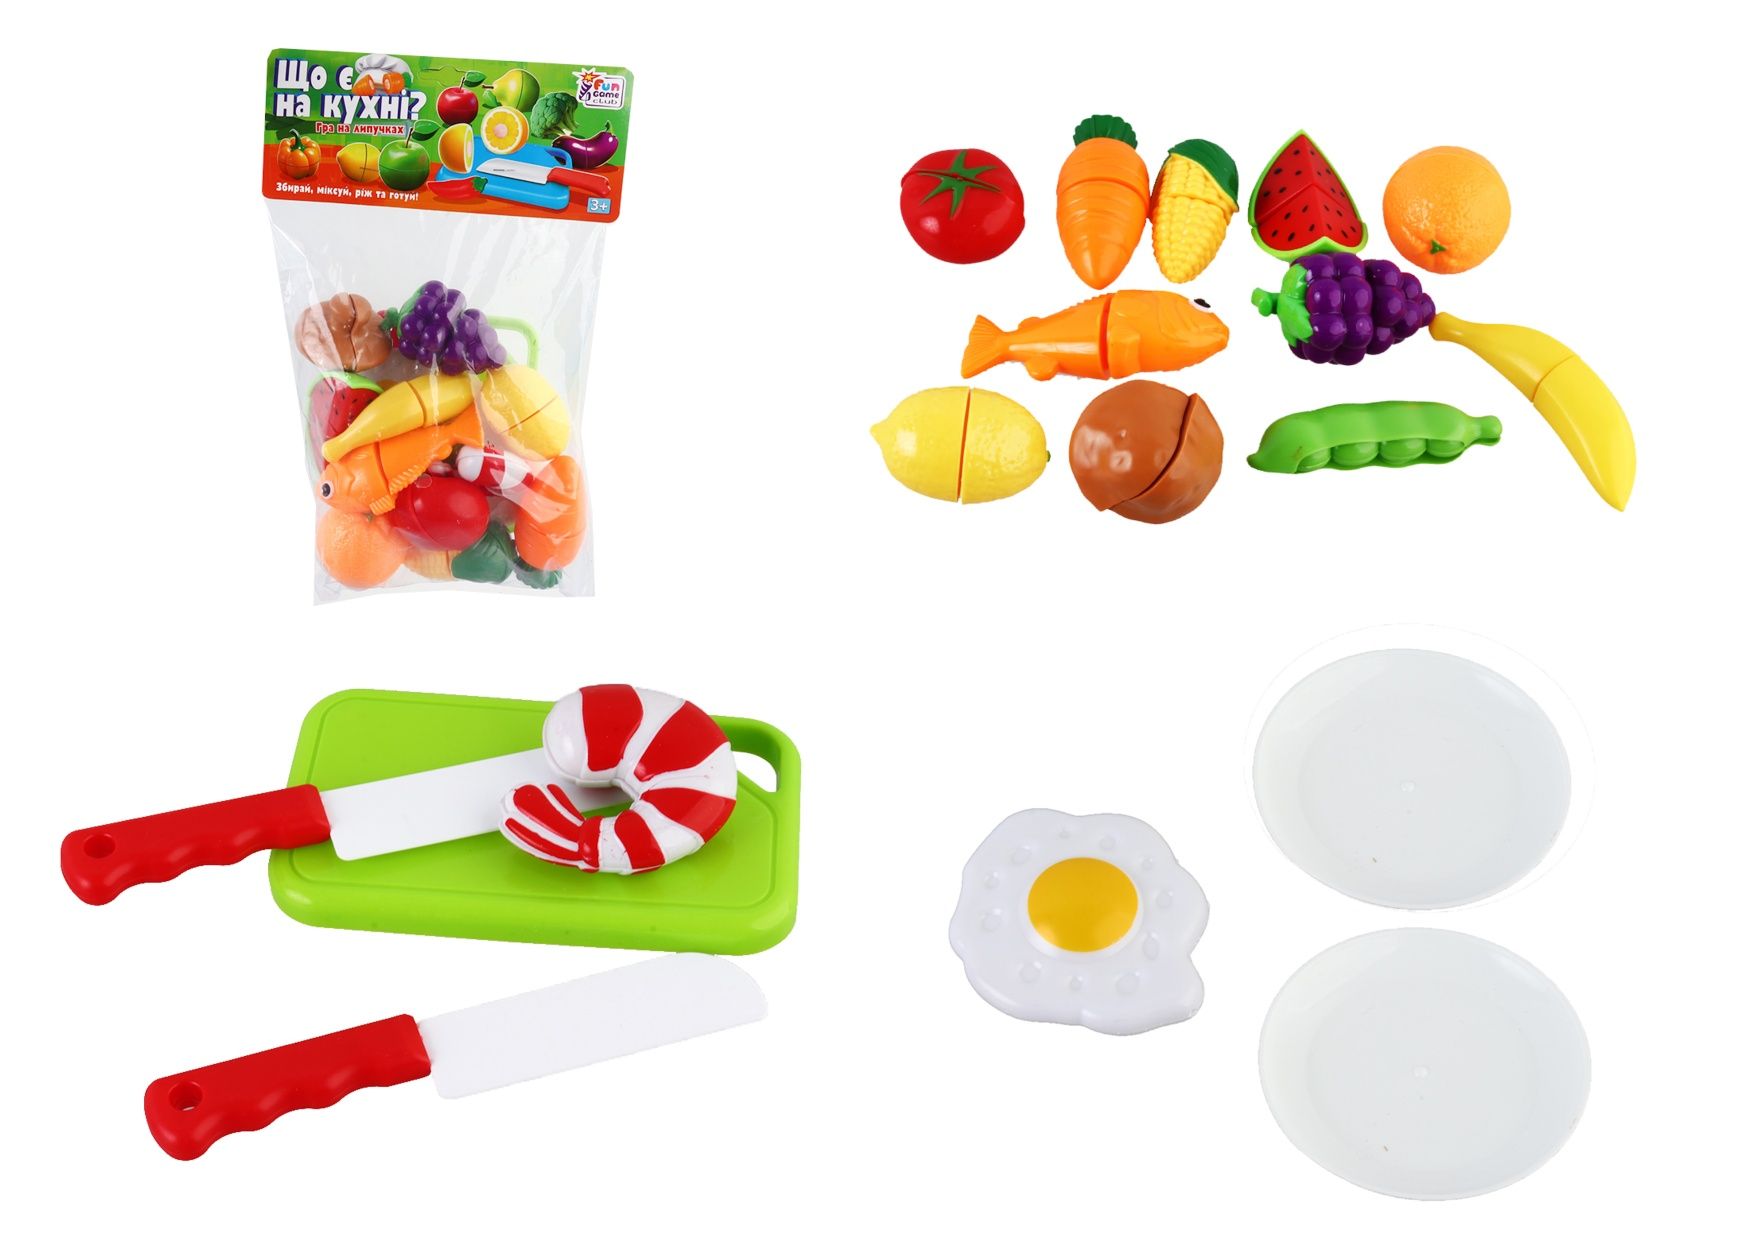 Детская игрушка Посуда Кухня Корзина Тележка Овощи Фрукты на липучке